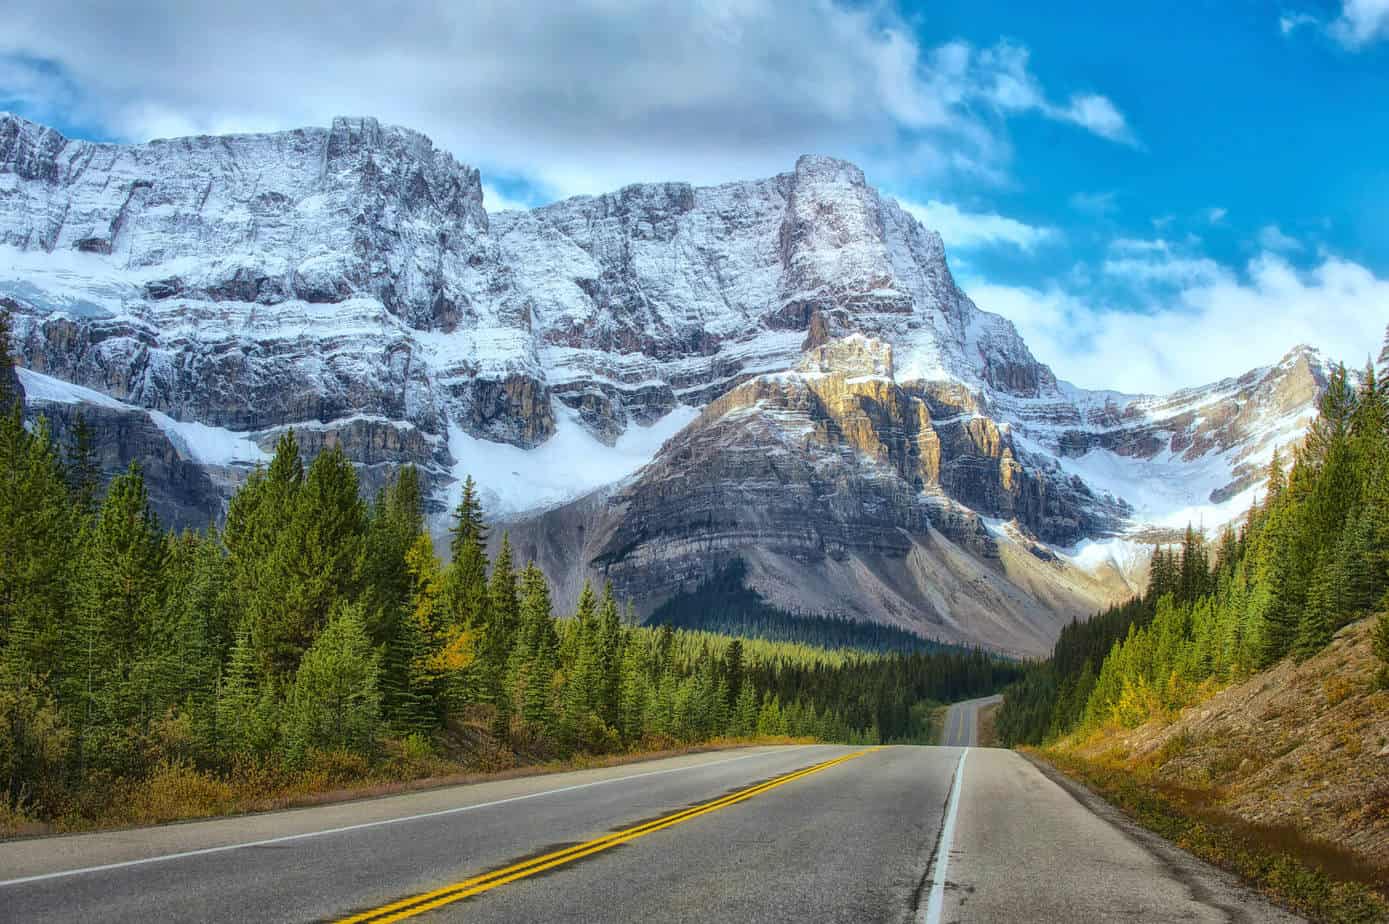 Road running through Banff National Park, Canada